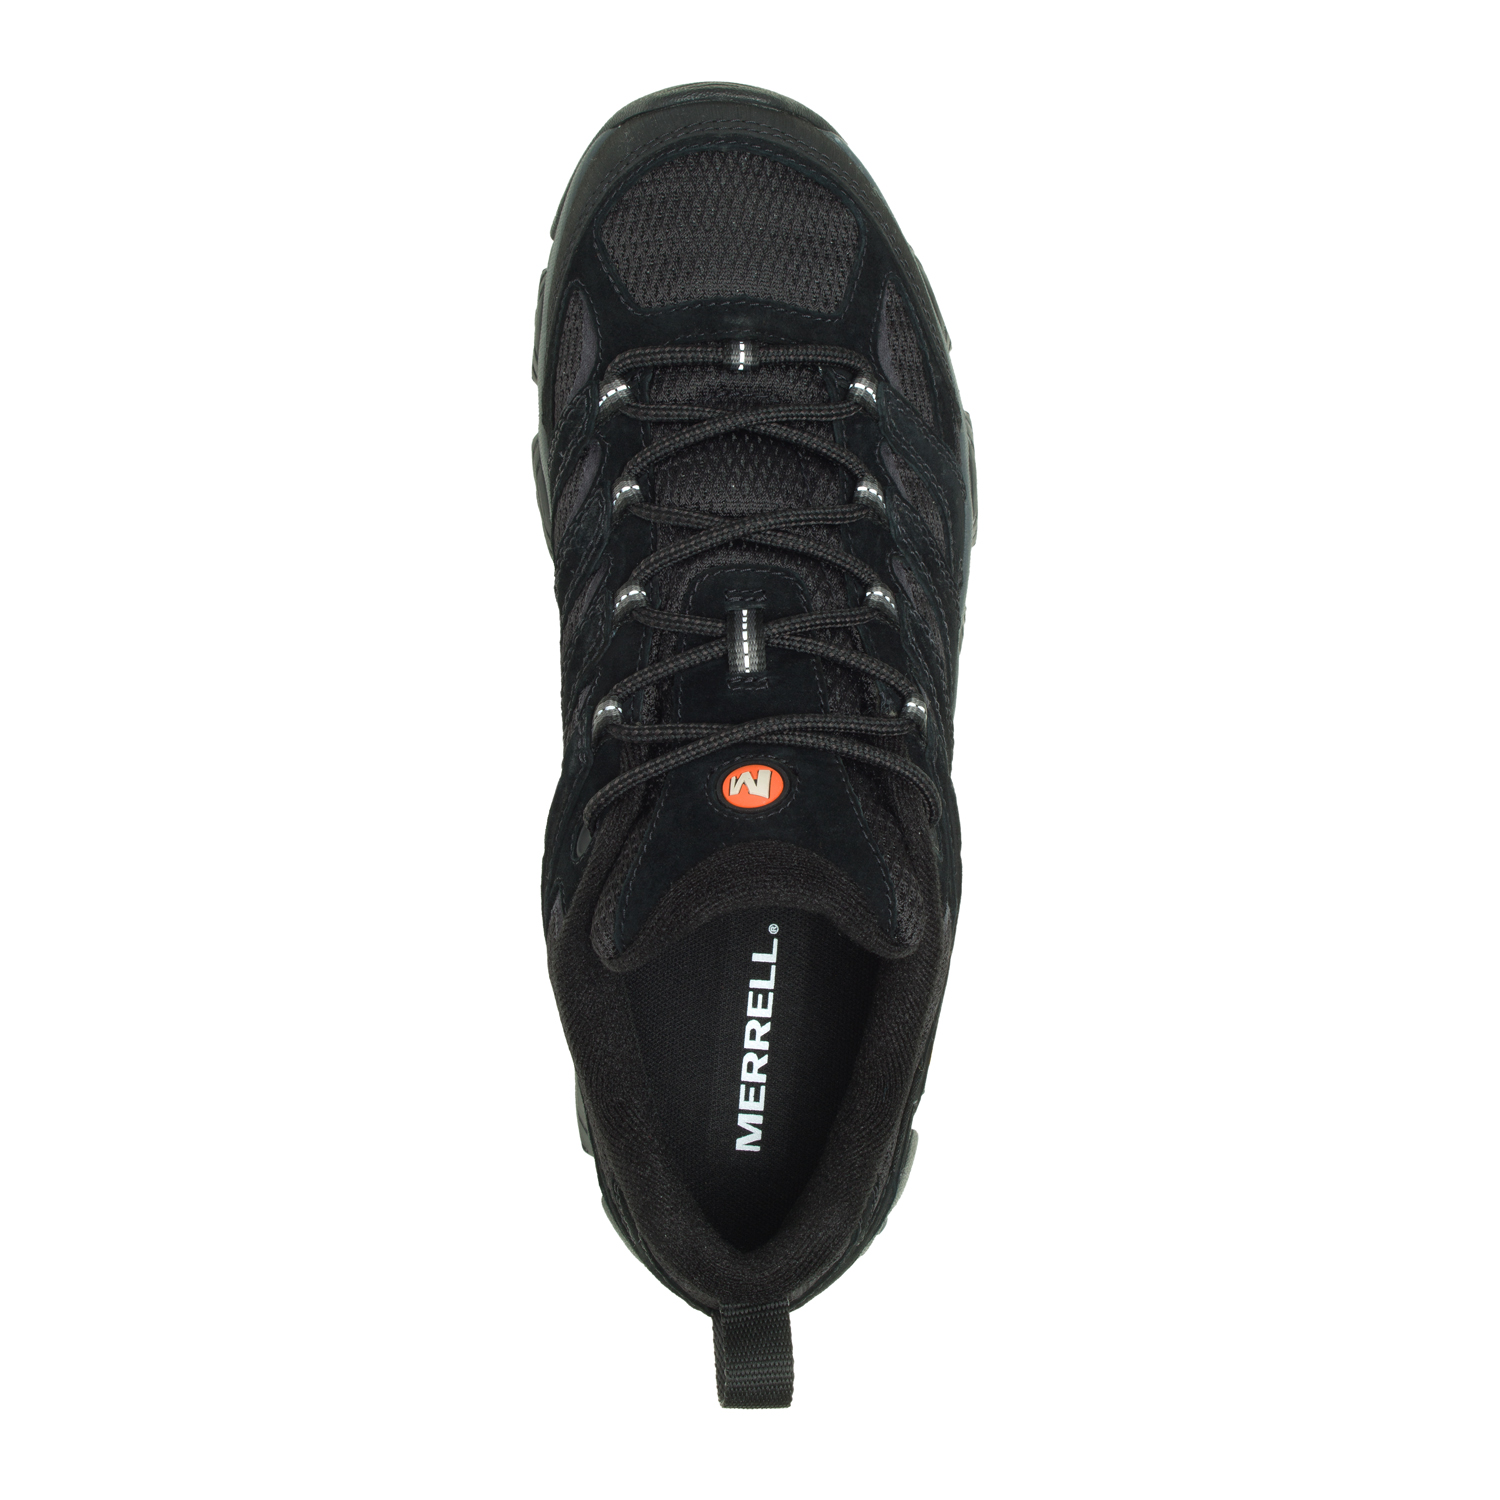 Merrell Moab 3 Waterproof Hiking Shoes